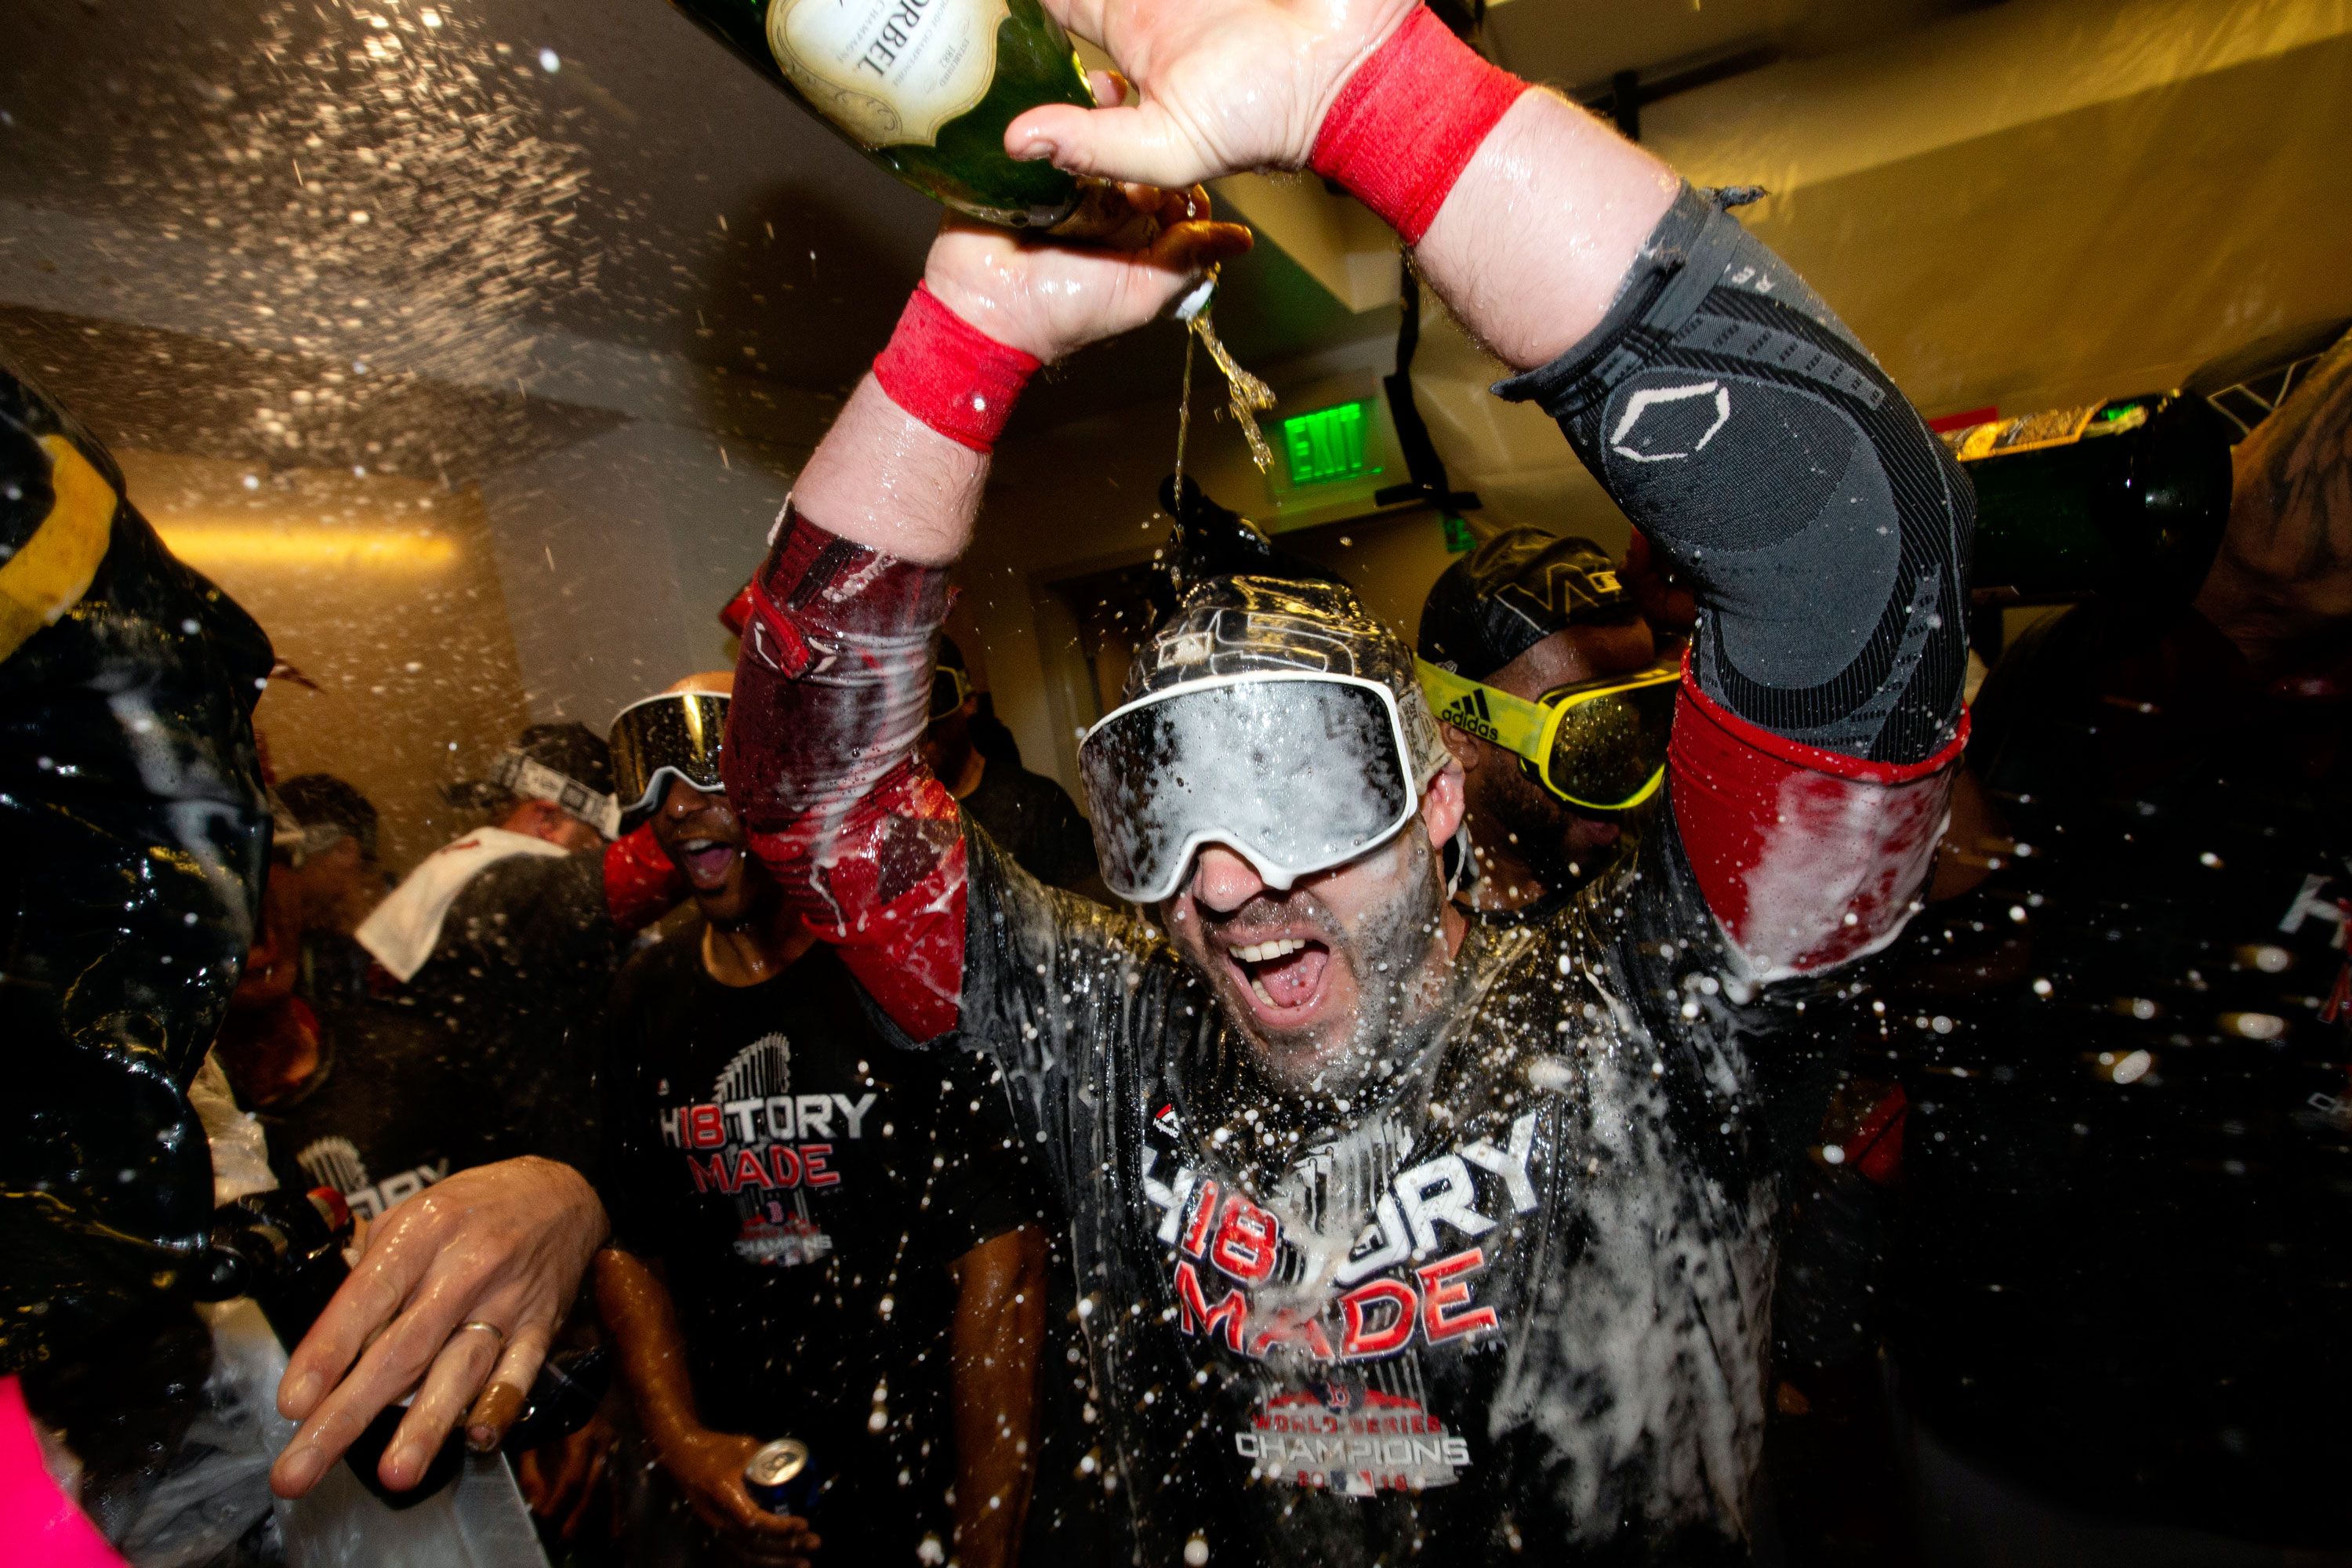 Celebrating World Series Champions Boston Red Sox